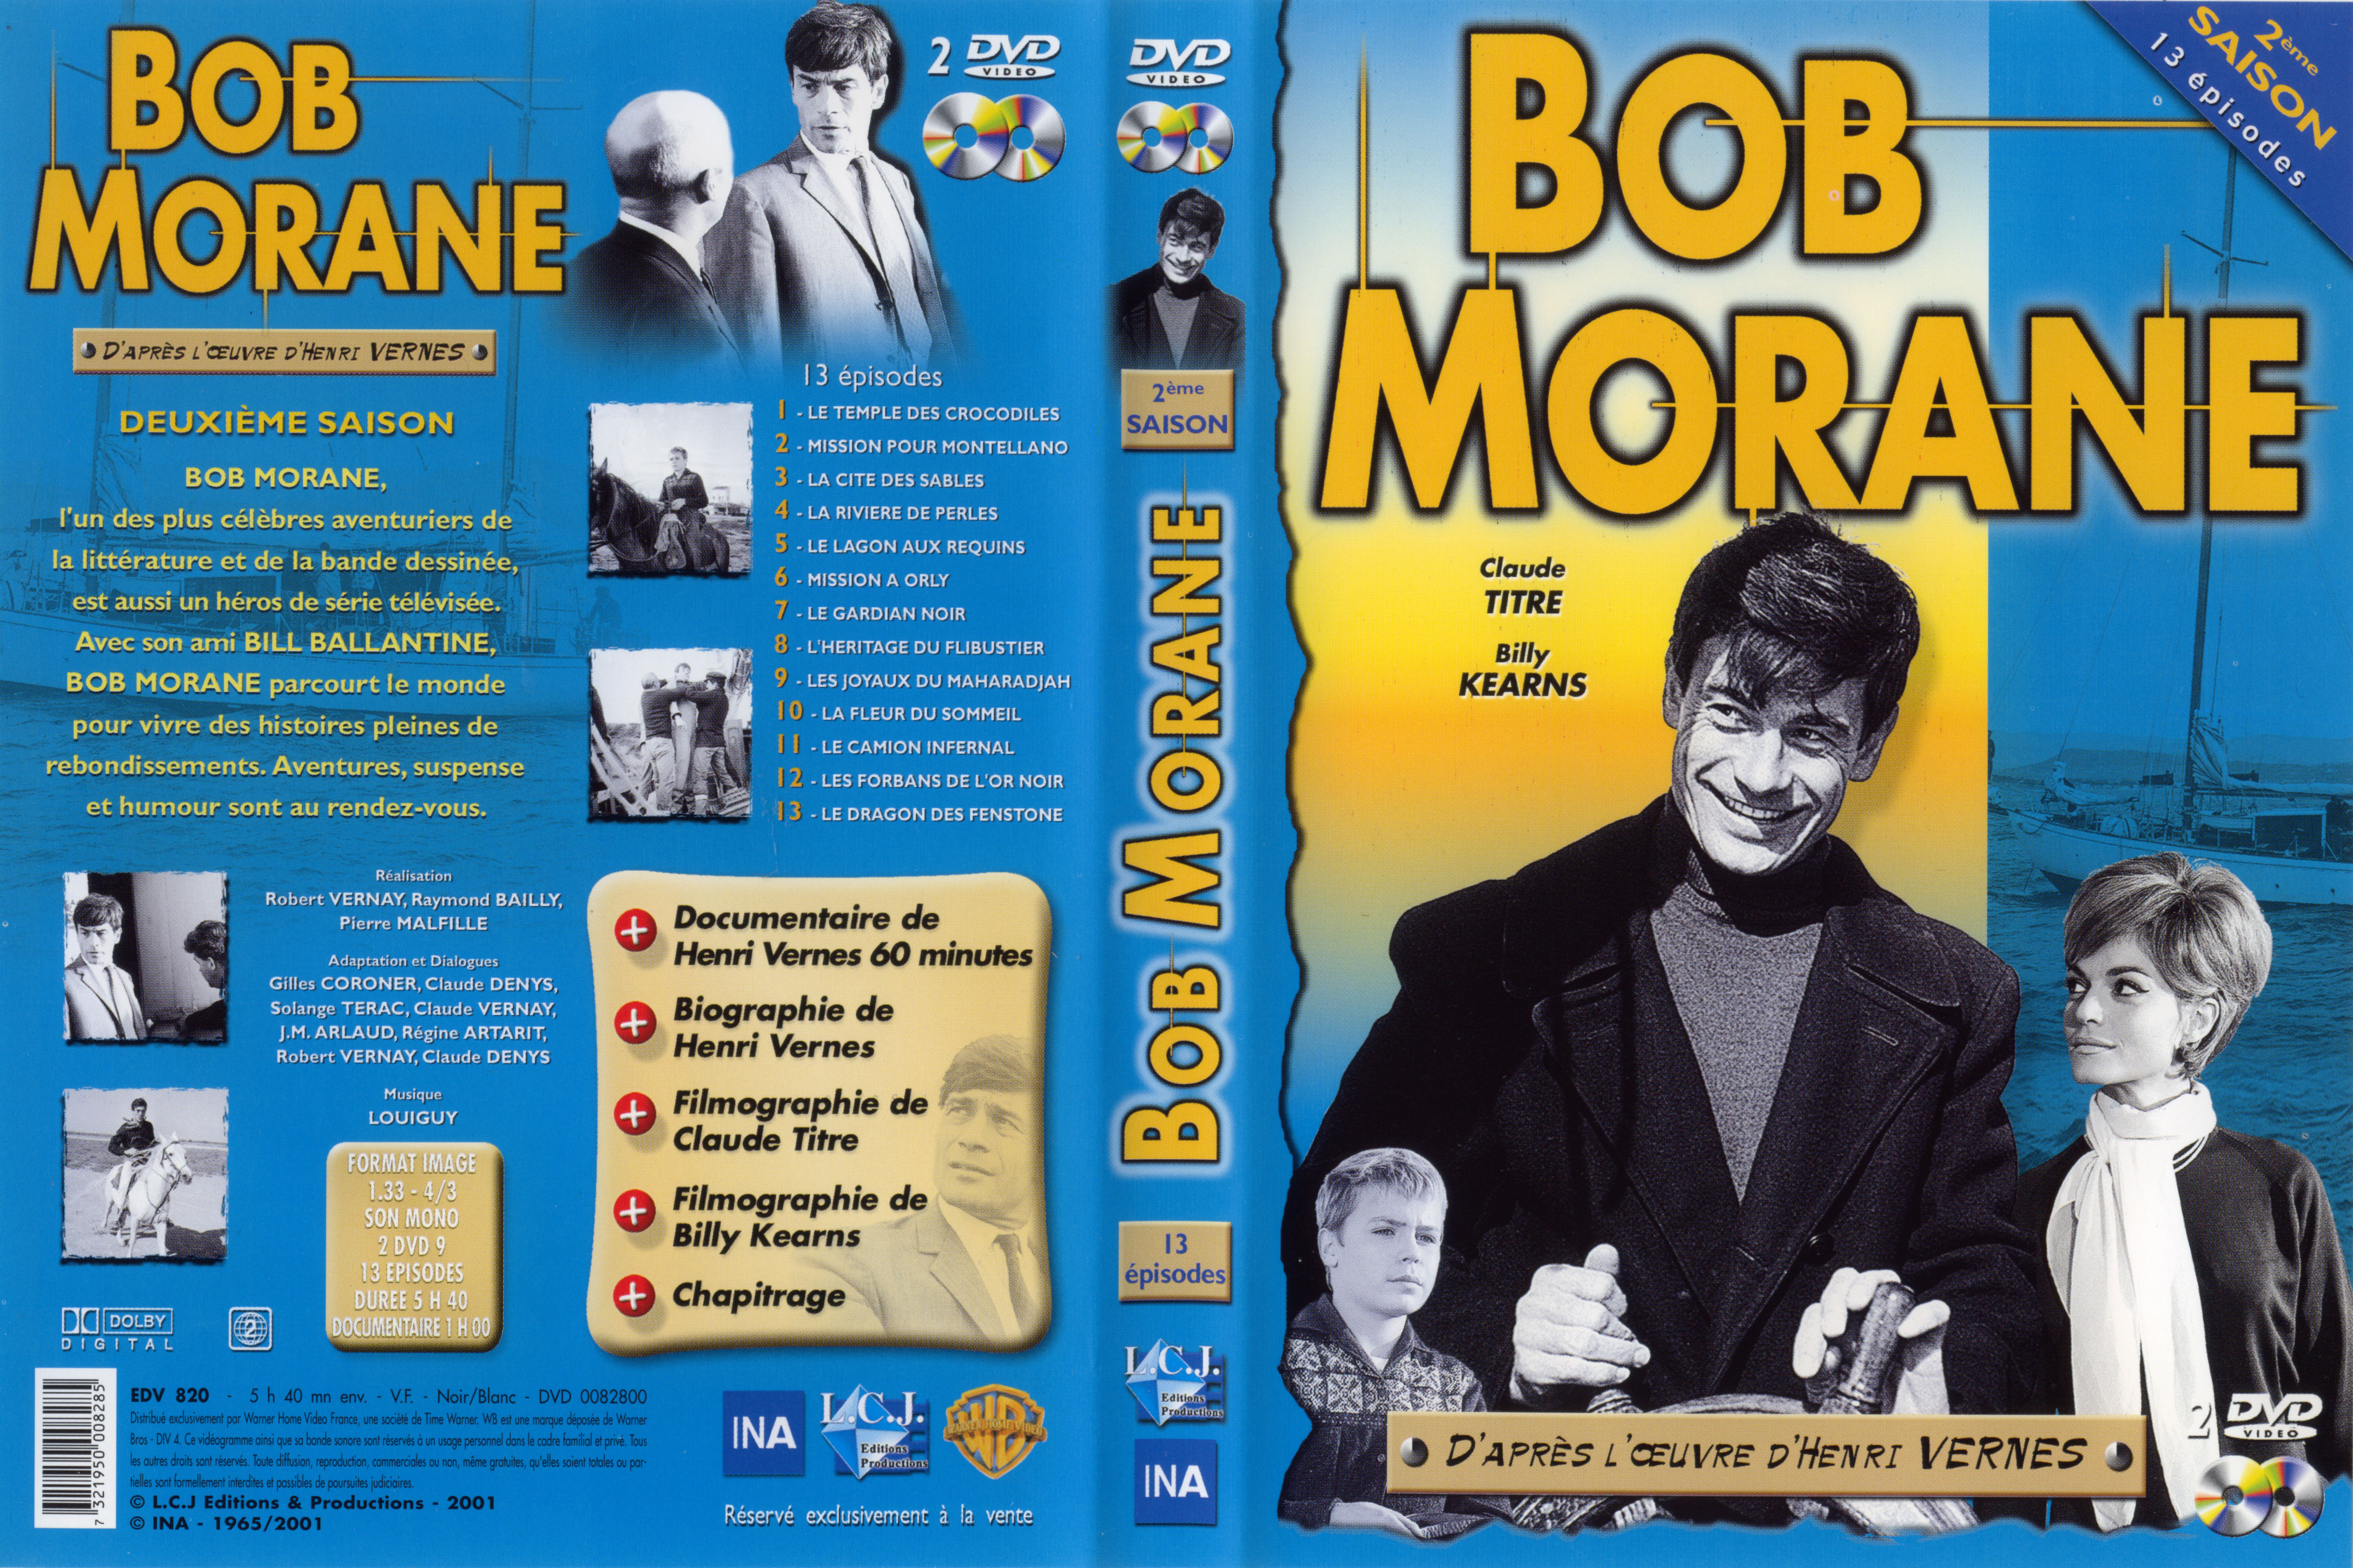 Jaquette DVD Bob Morane saison 2